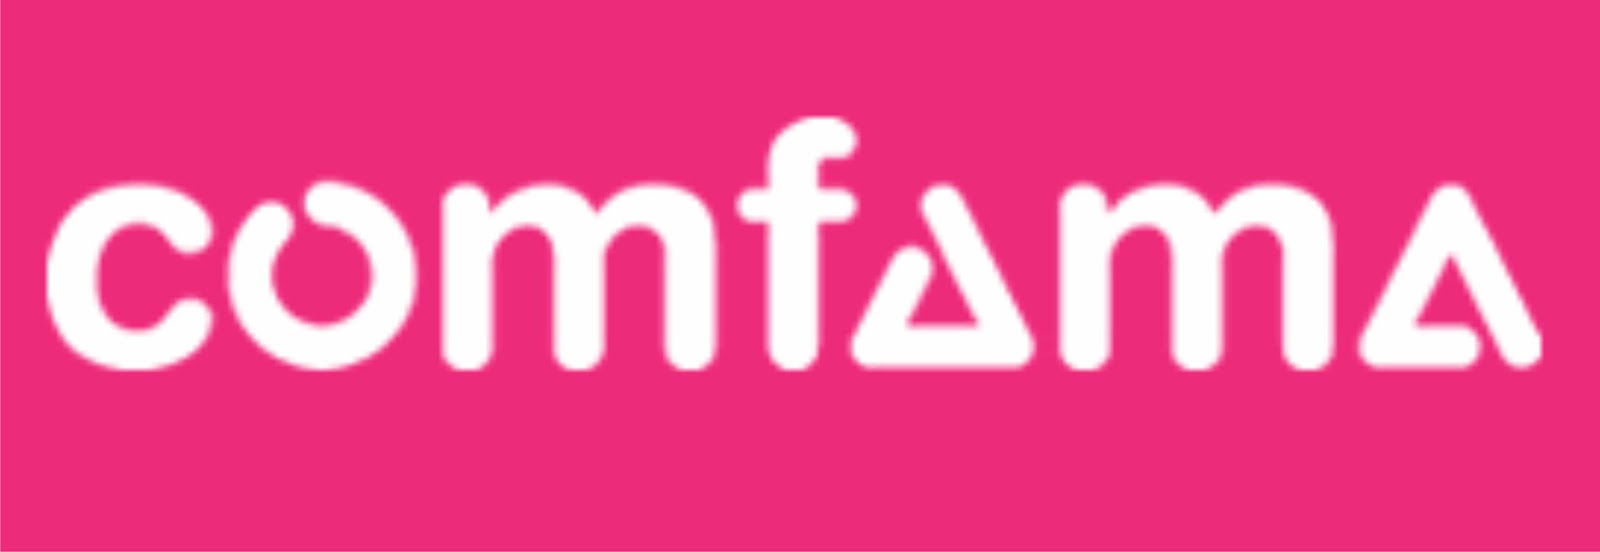 Comfama Logo photo - 1